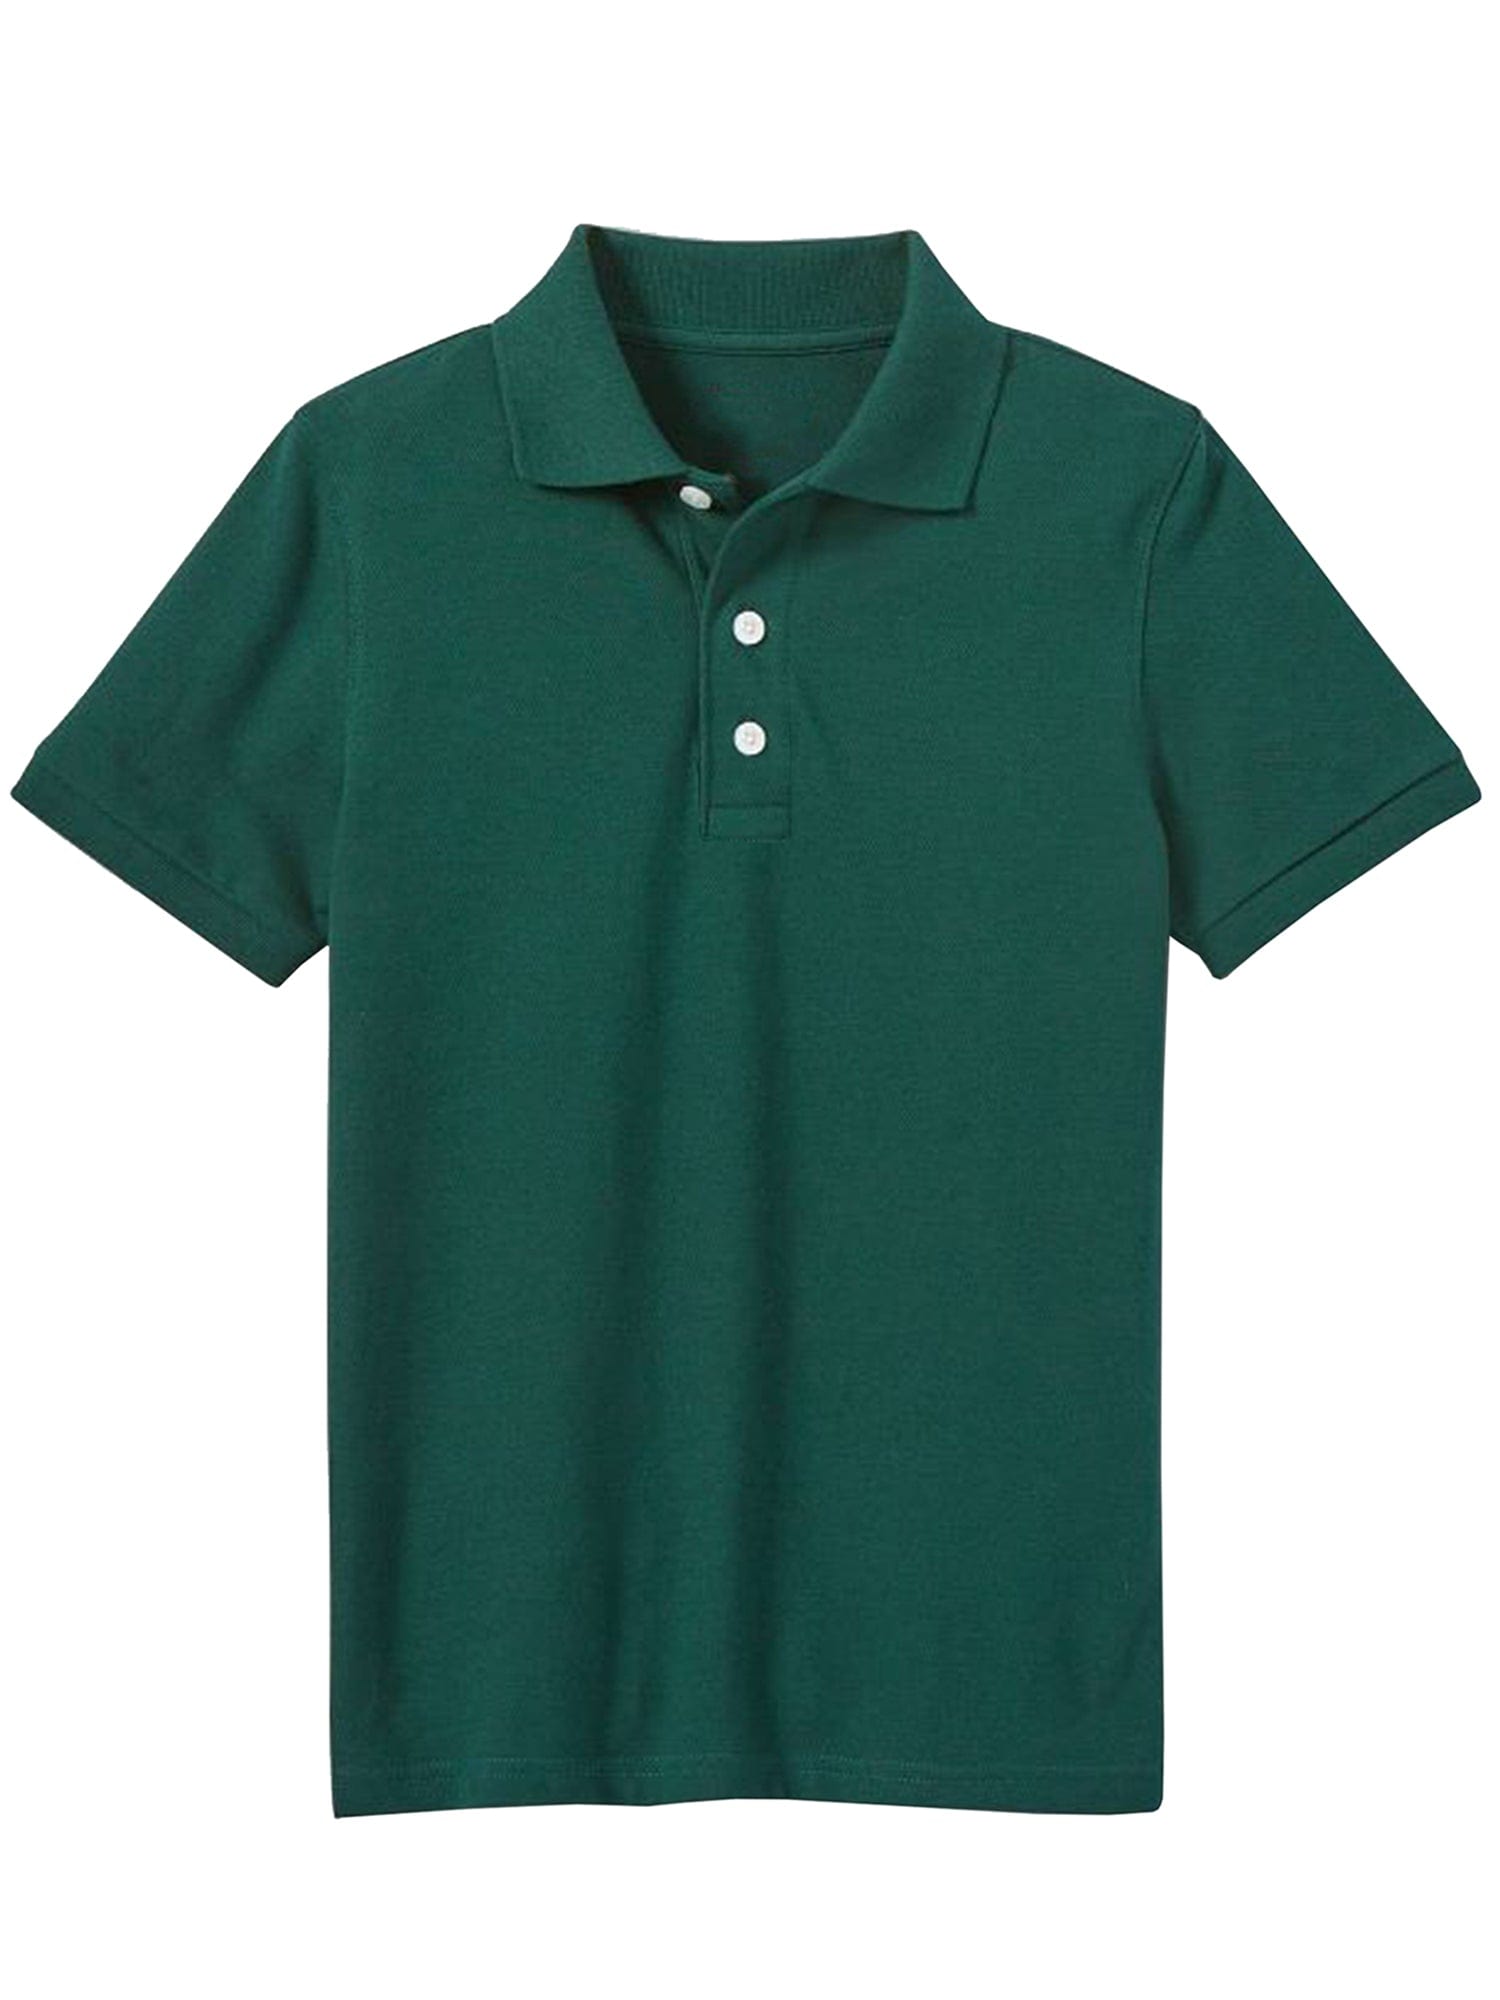 Boy's Short Sleeve Polo Shirt (Sizes 8-20) - GalaxybyHarvic